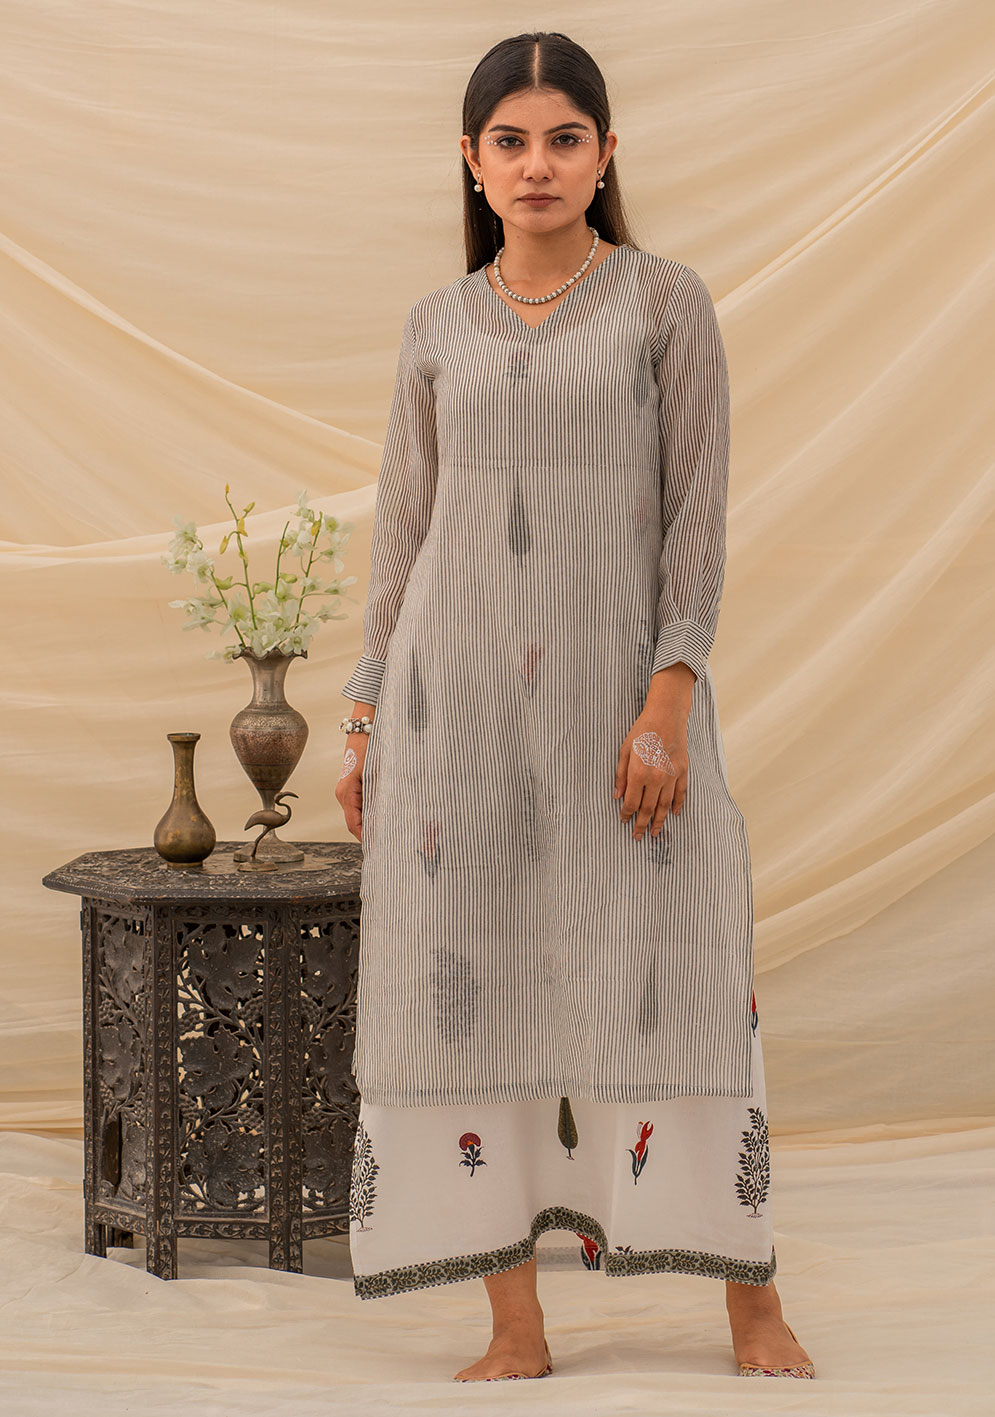 Bageecha mughal layer dress